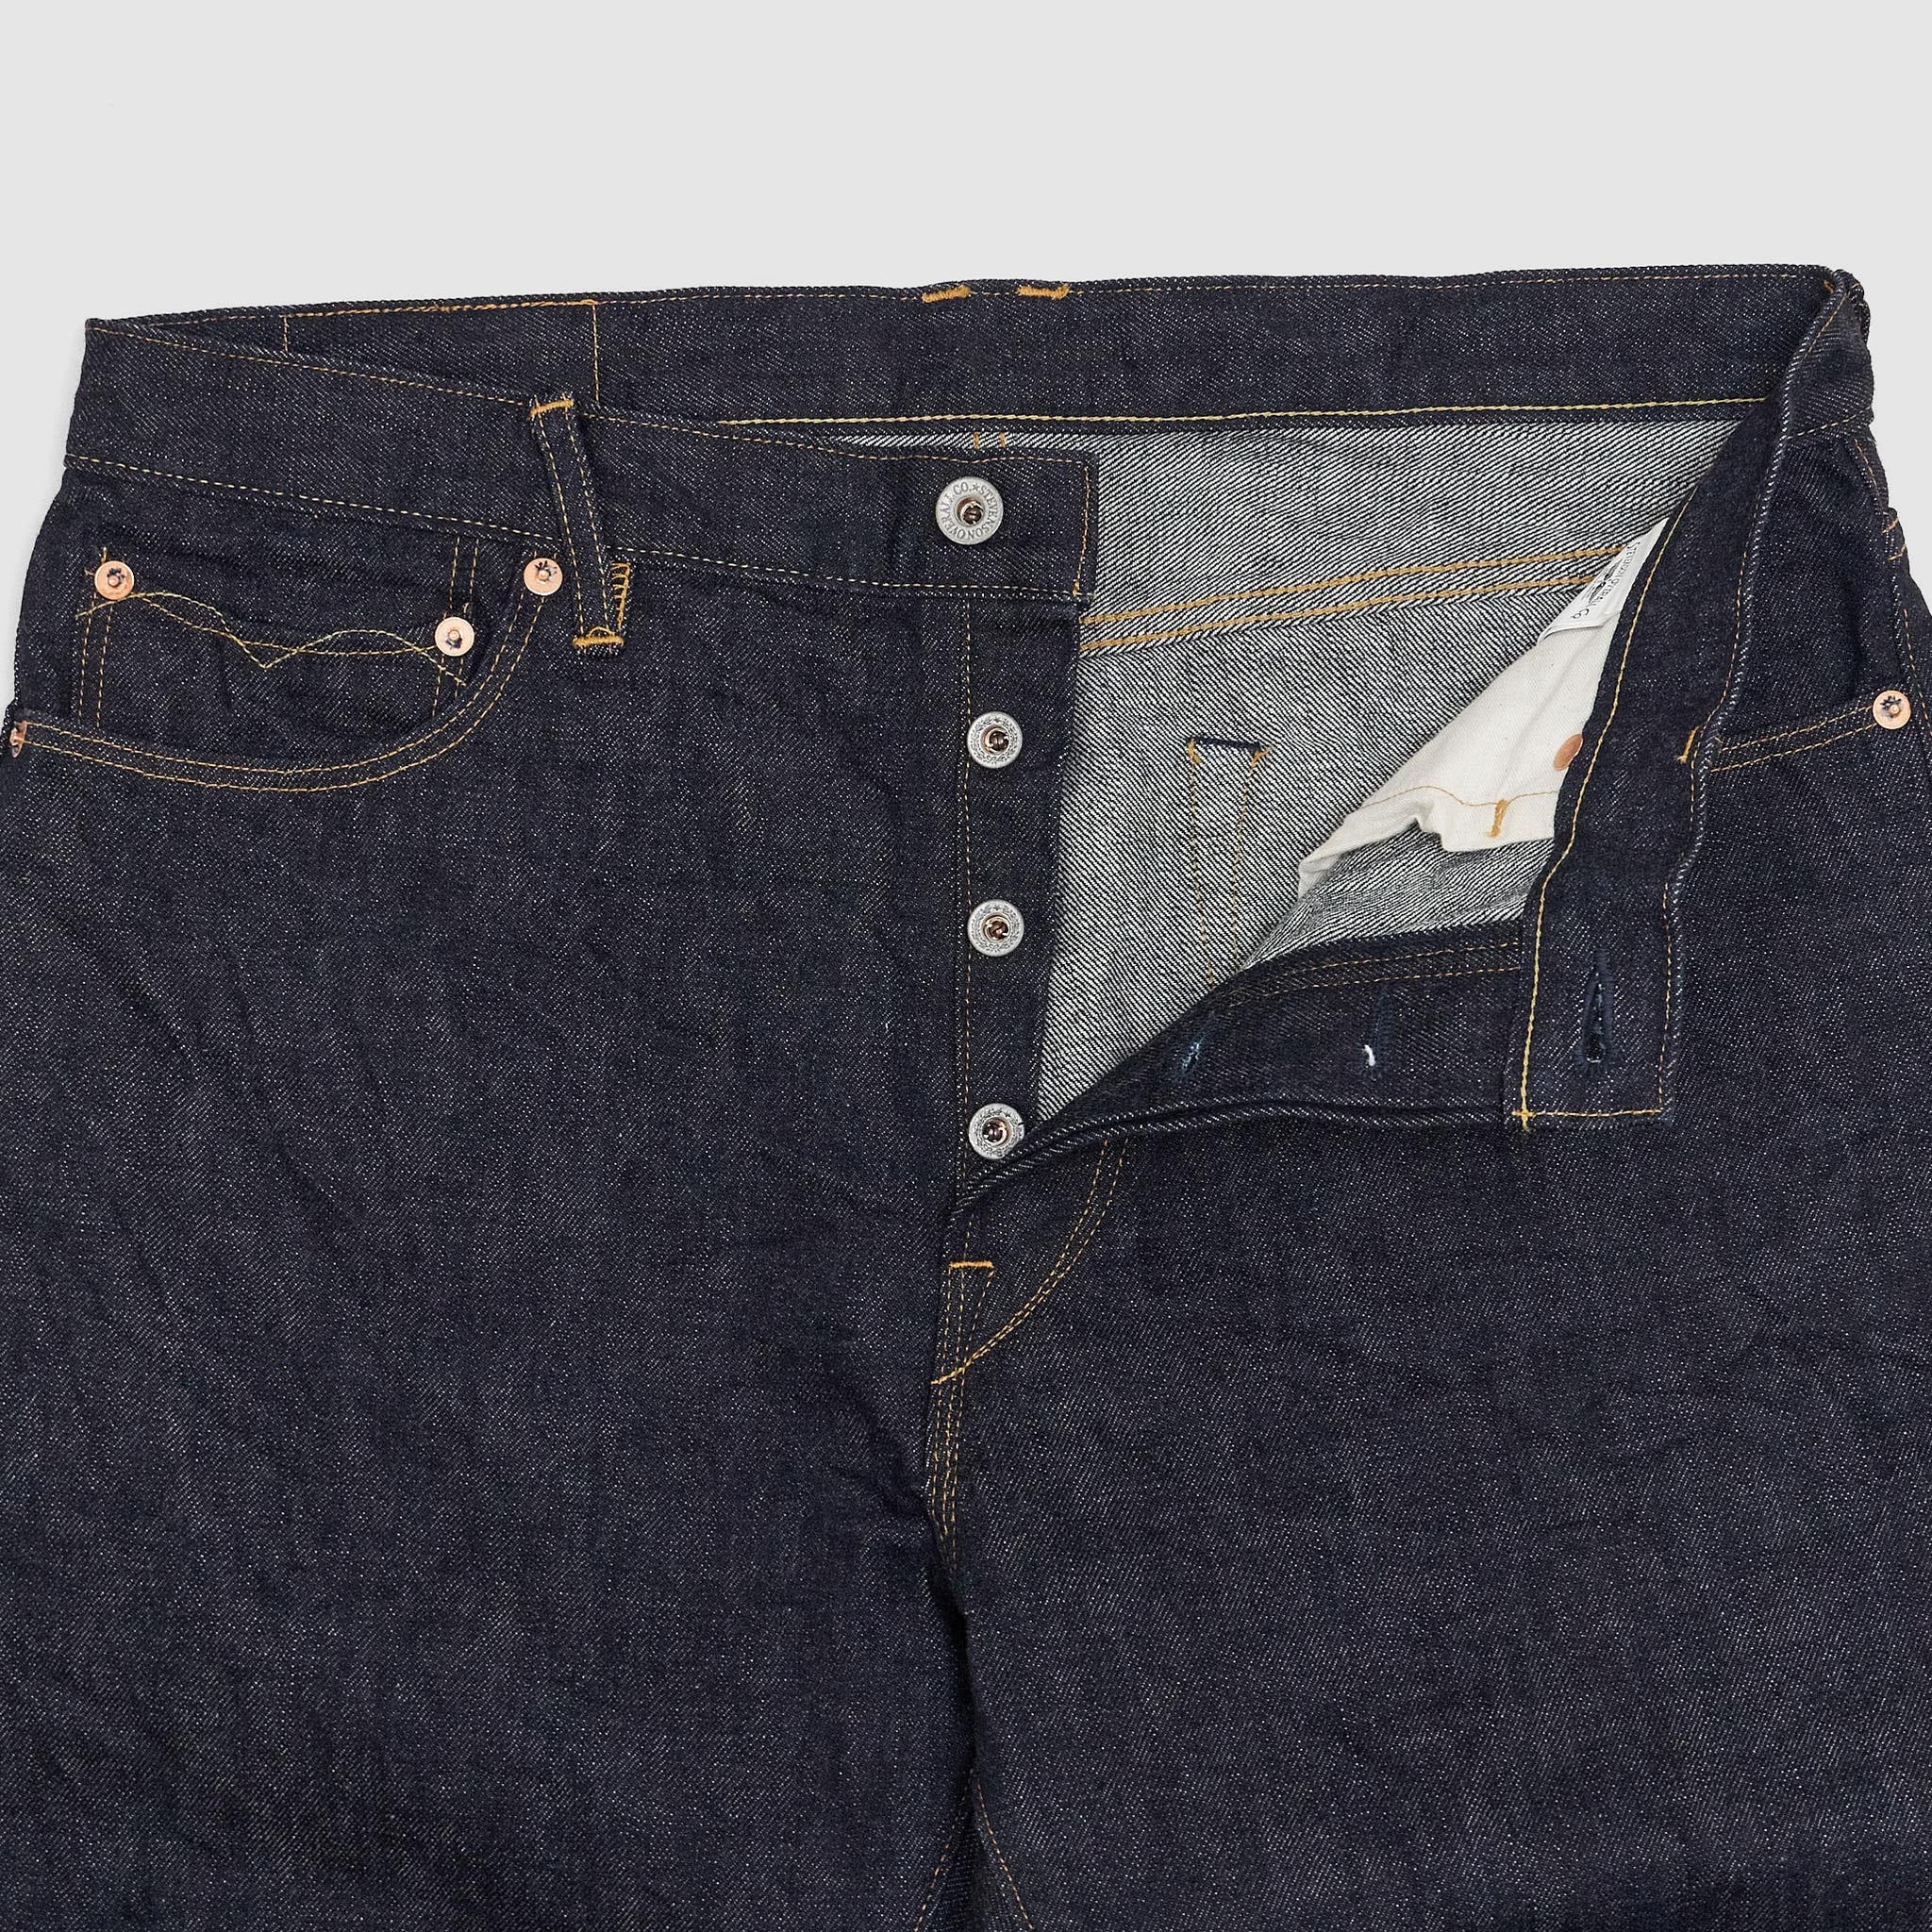 Stevenson Overall Santa Cruz 230-OSX Denim Jeans - DeeCee style